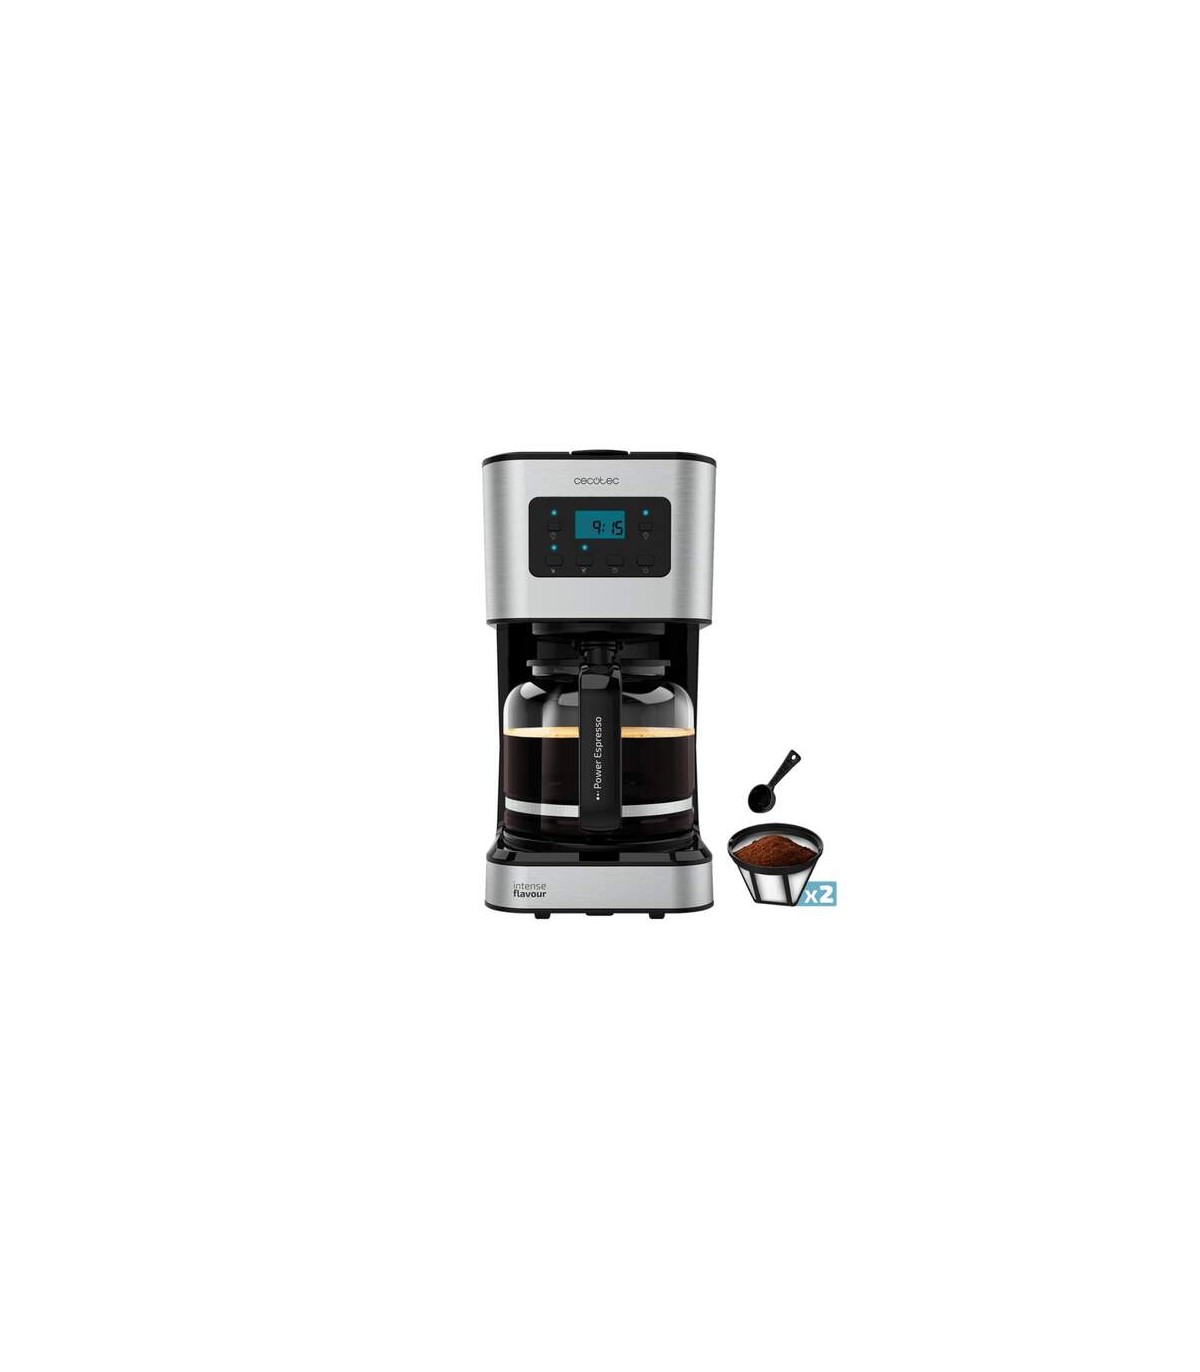 Cecotec Coffee 66 Smart Plus Cafetera de Goteo Programable 1.5L 950W